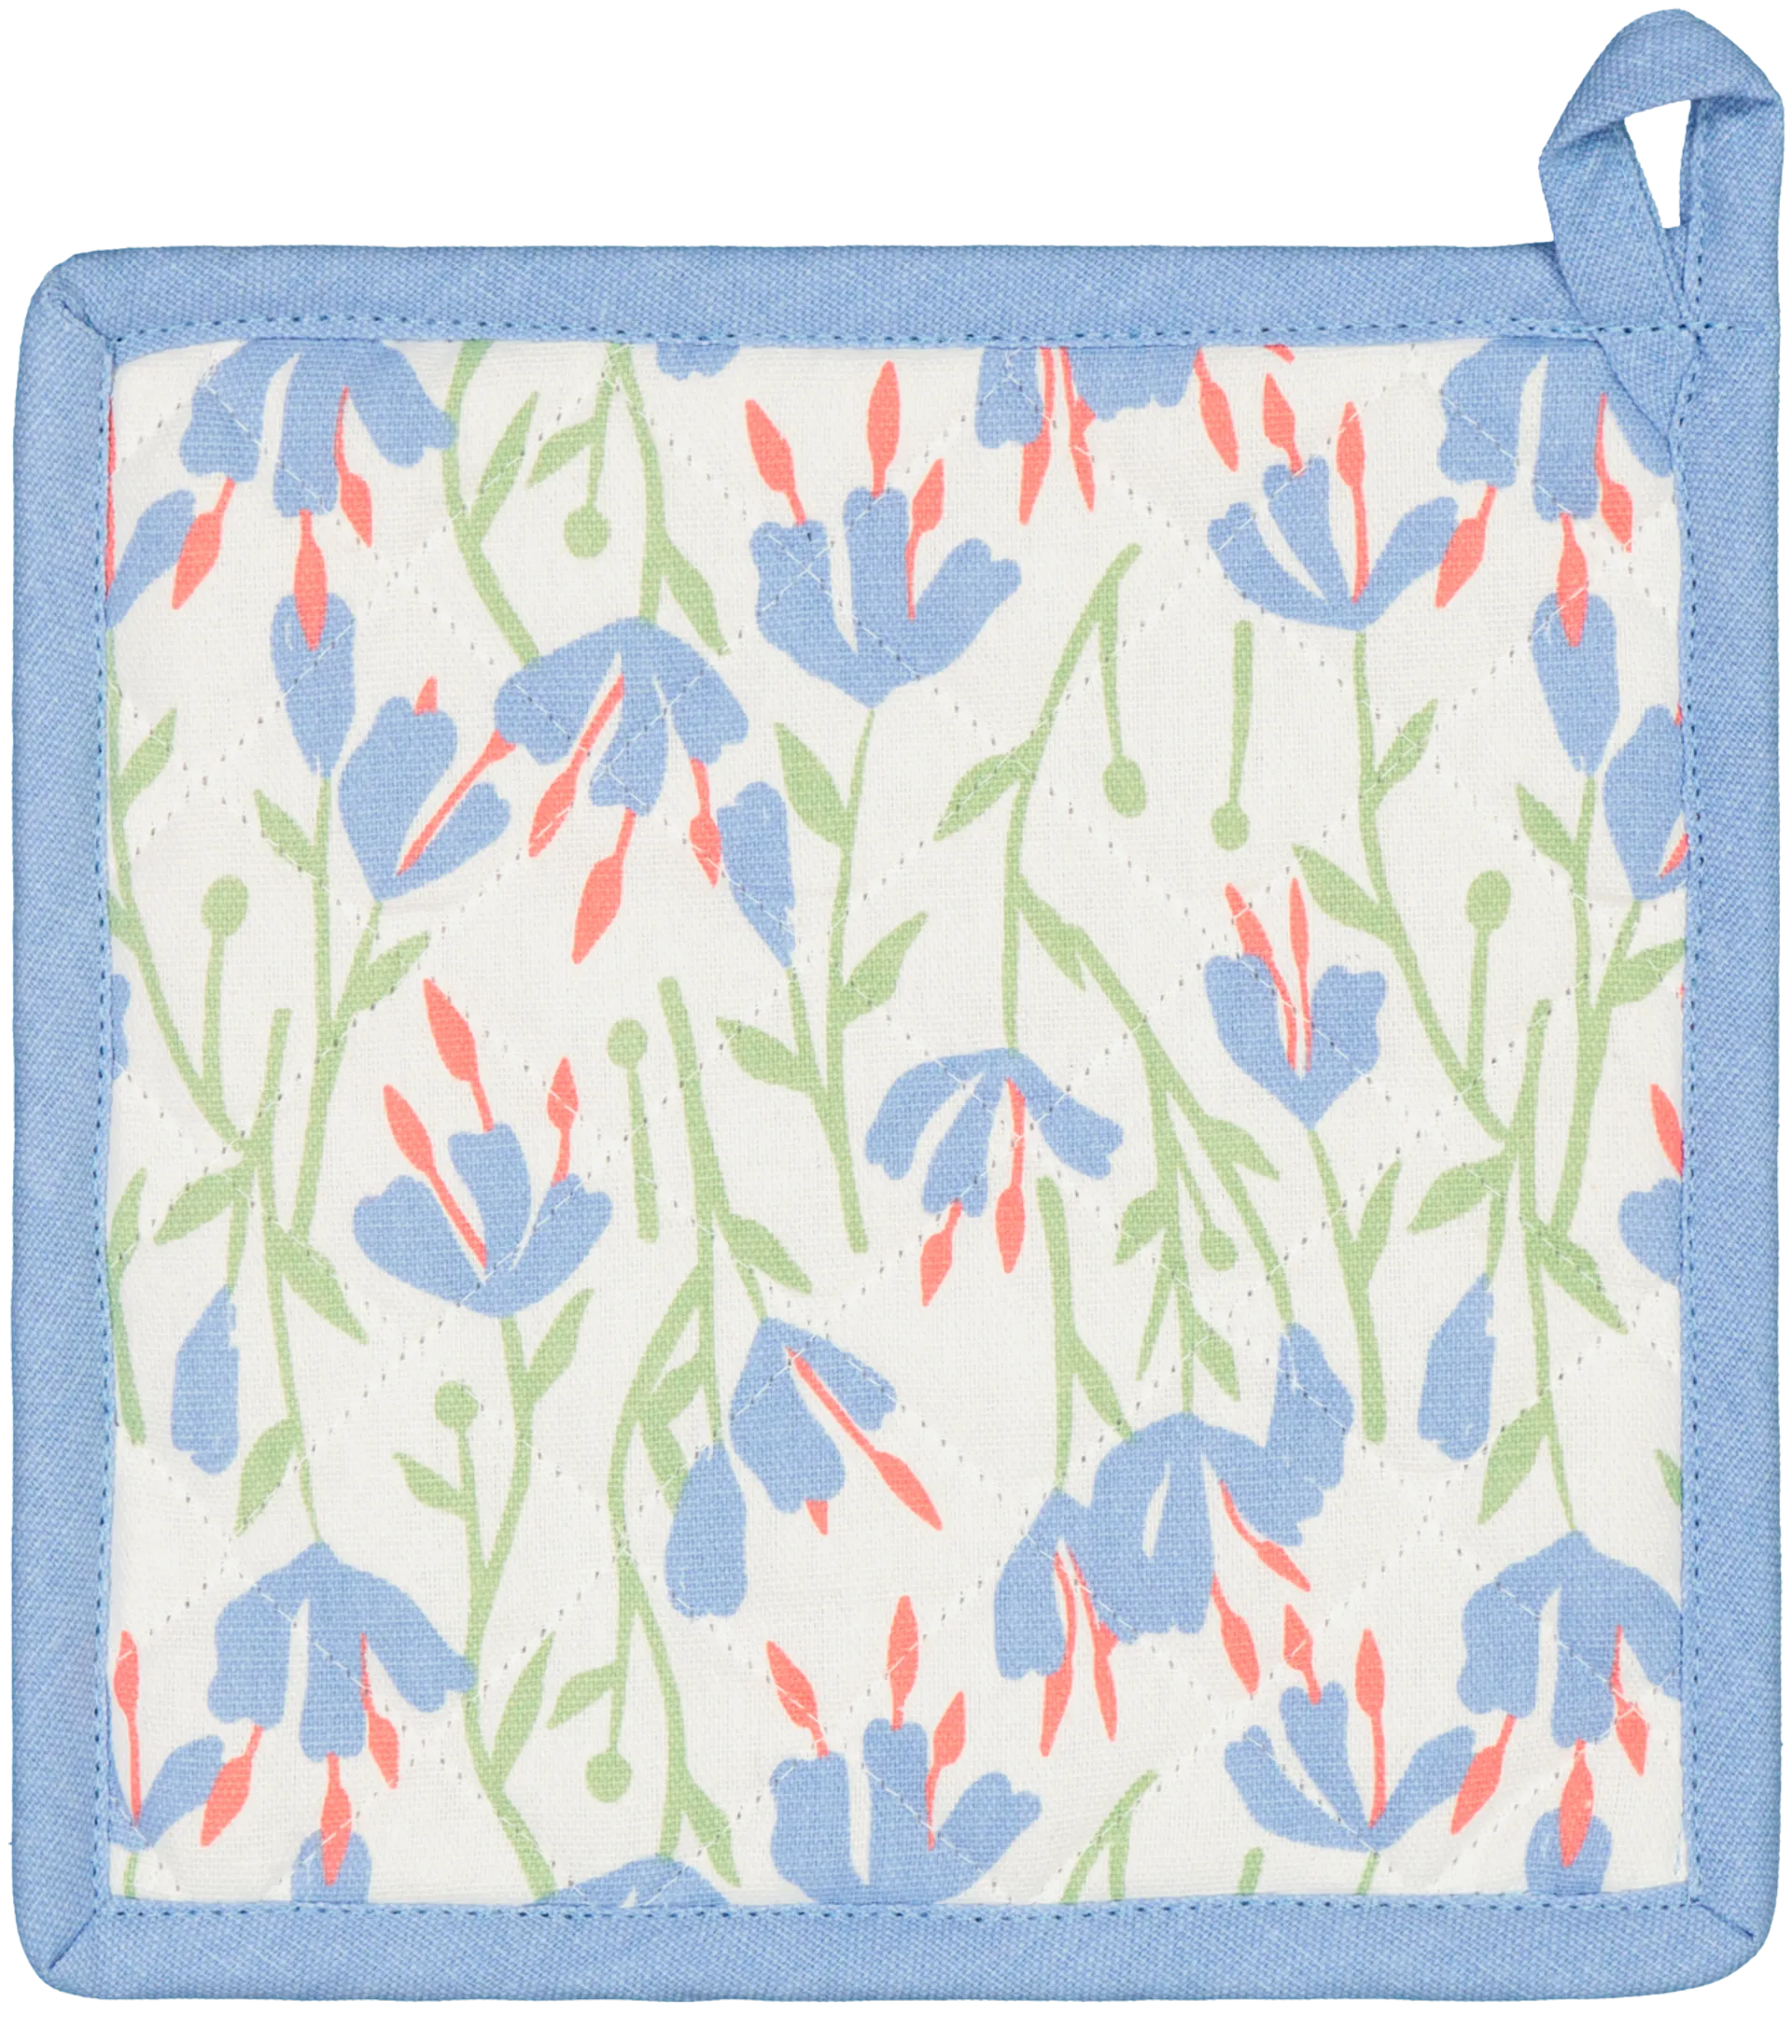 House patalappu Summer Flowers 22x22 cm sininen PatternLab - 2